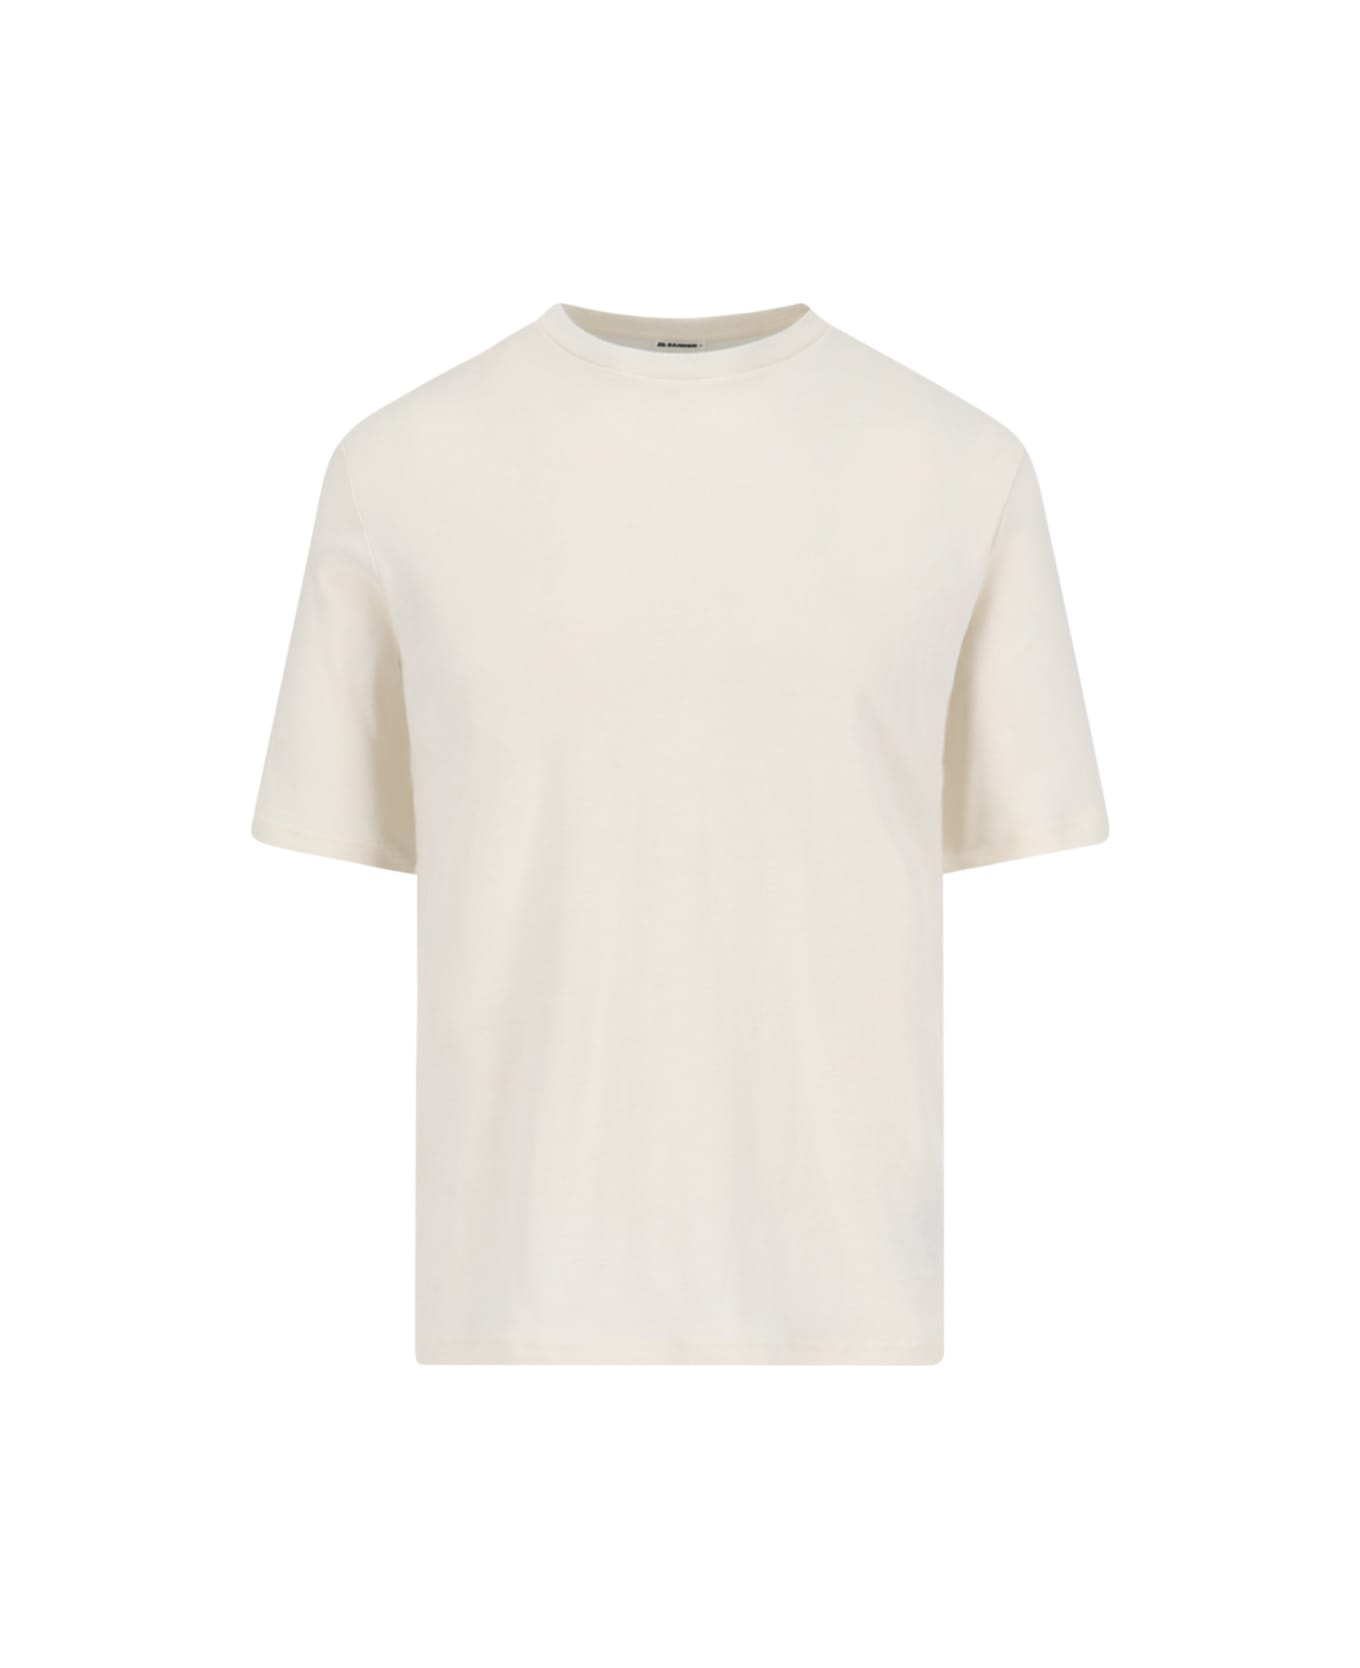 Jil Sander '3-pack' T-shirt Set - White タンクトップ